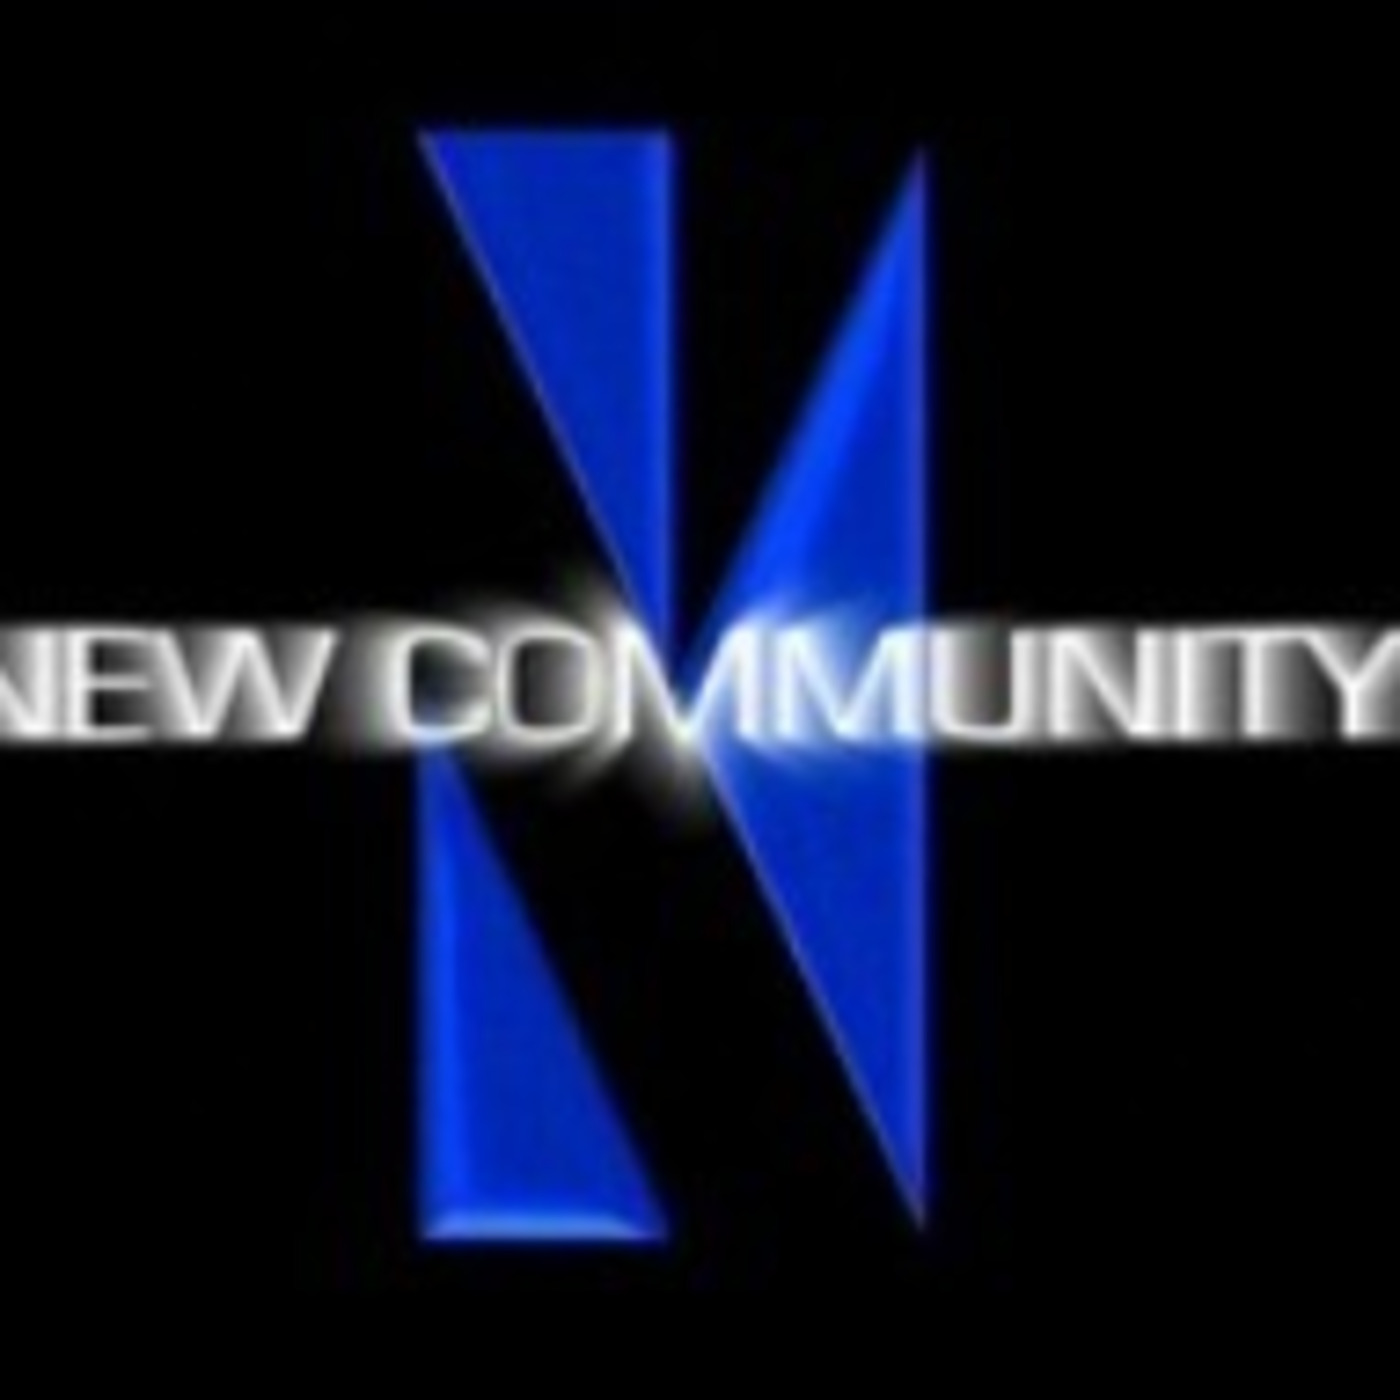 New Community Podcast